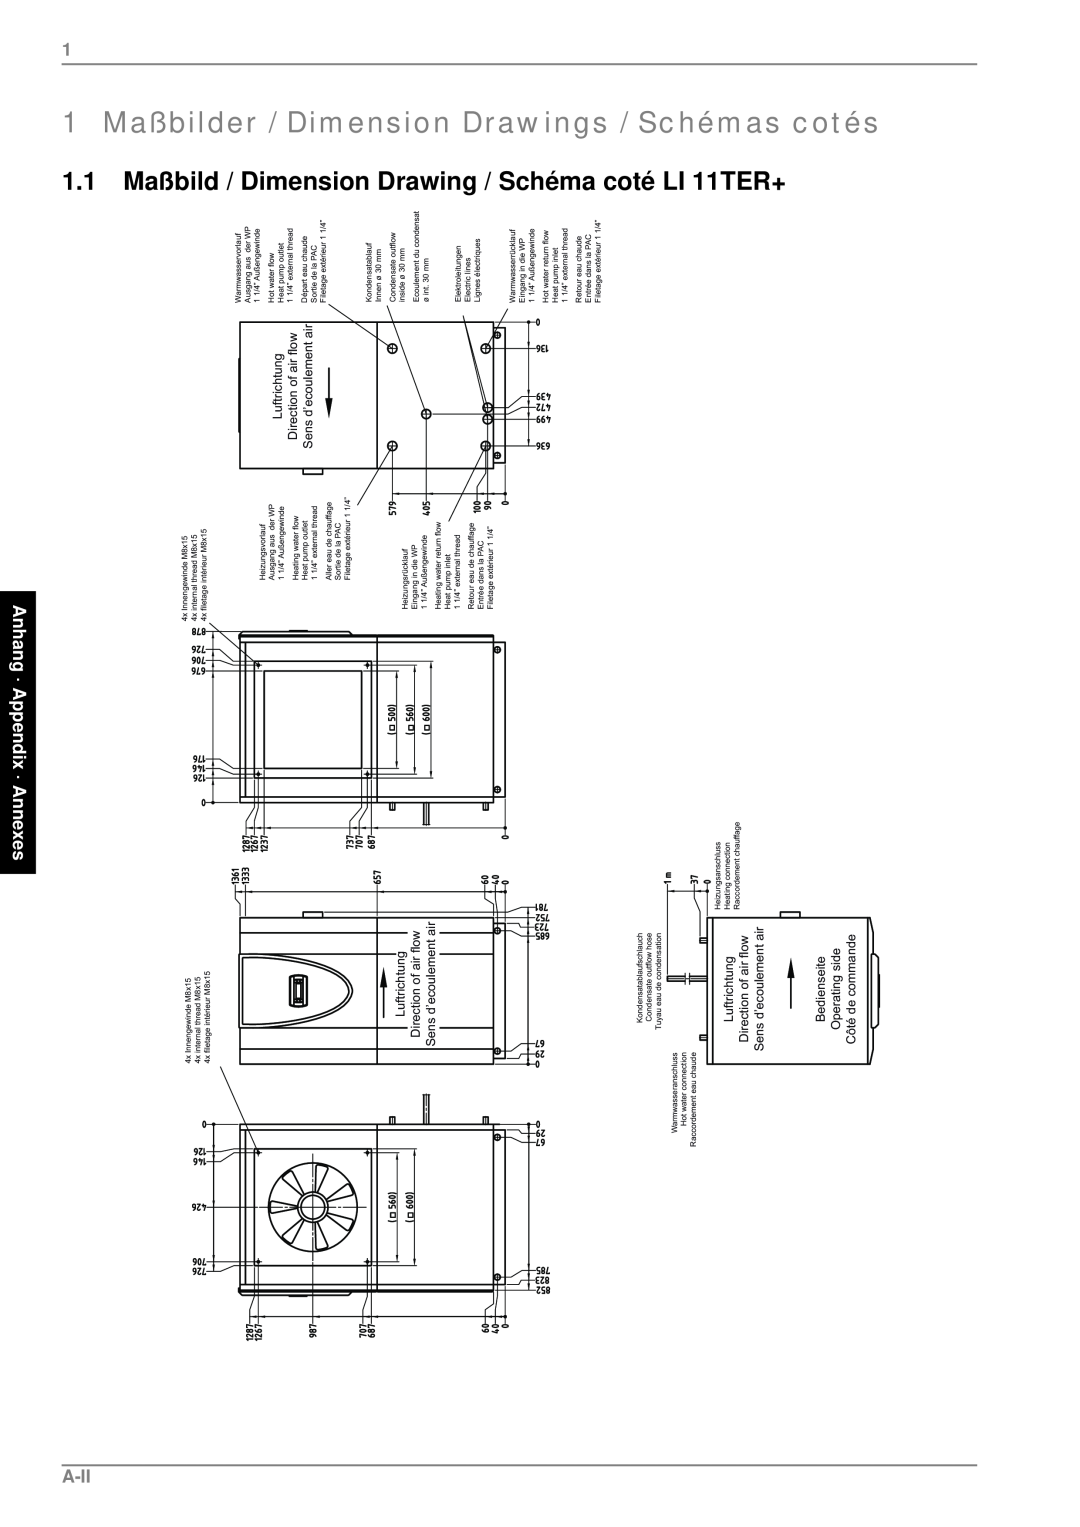 Dimplex LI 11TER+, 190 1 Maßbilder / Dimension Drawings / Schémas cotés, Anhang · Appendix · Annexes, A-Ii, Xiwulfkwxqj 